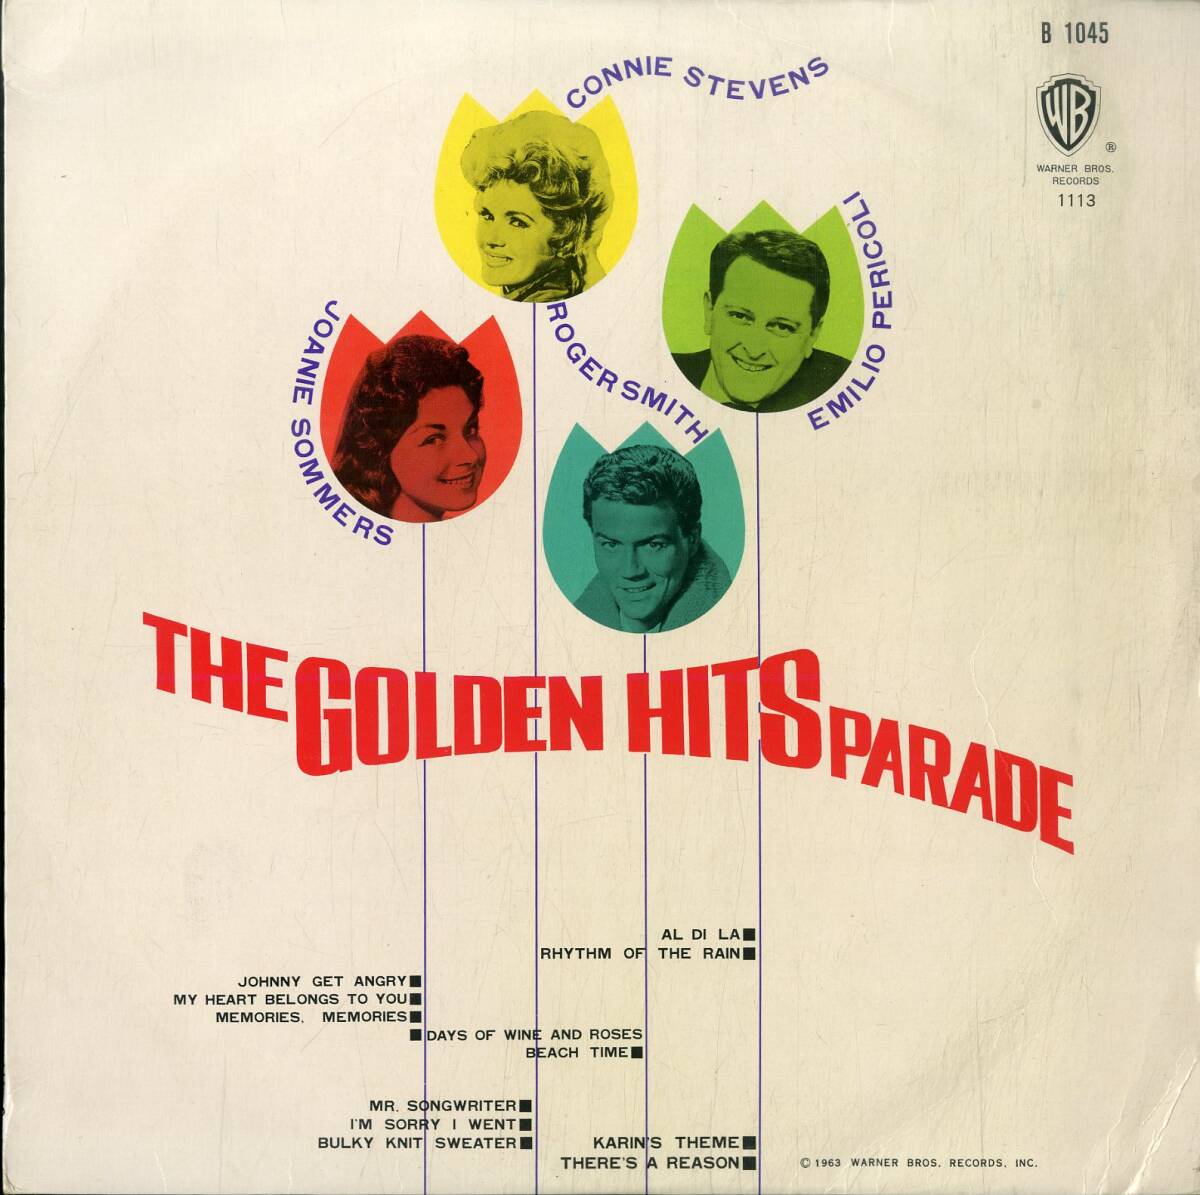 A00585480/LP/コニー・スティーヴンス / ジョニー・ソマーズ / キャノン・シスターズ etc「The Golden Hits Parade (B-1045)」_画像1